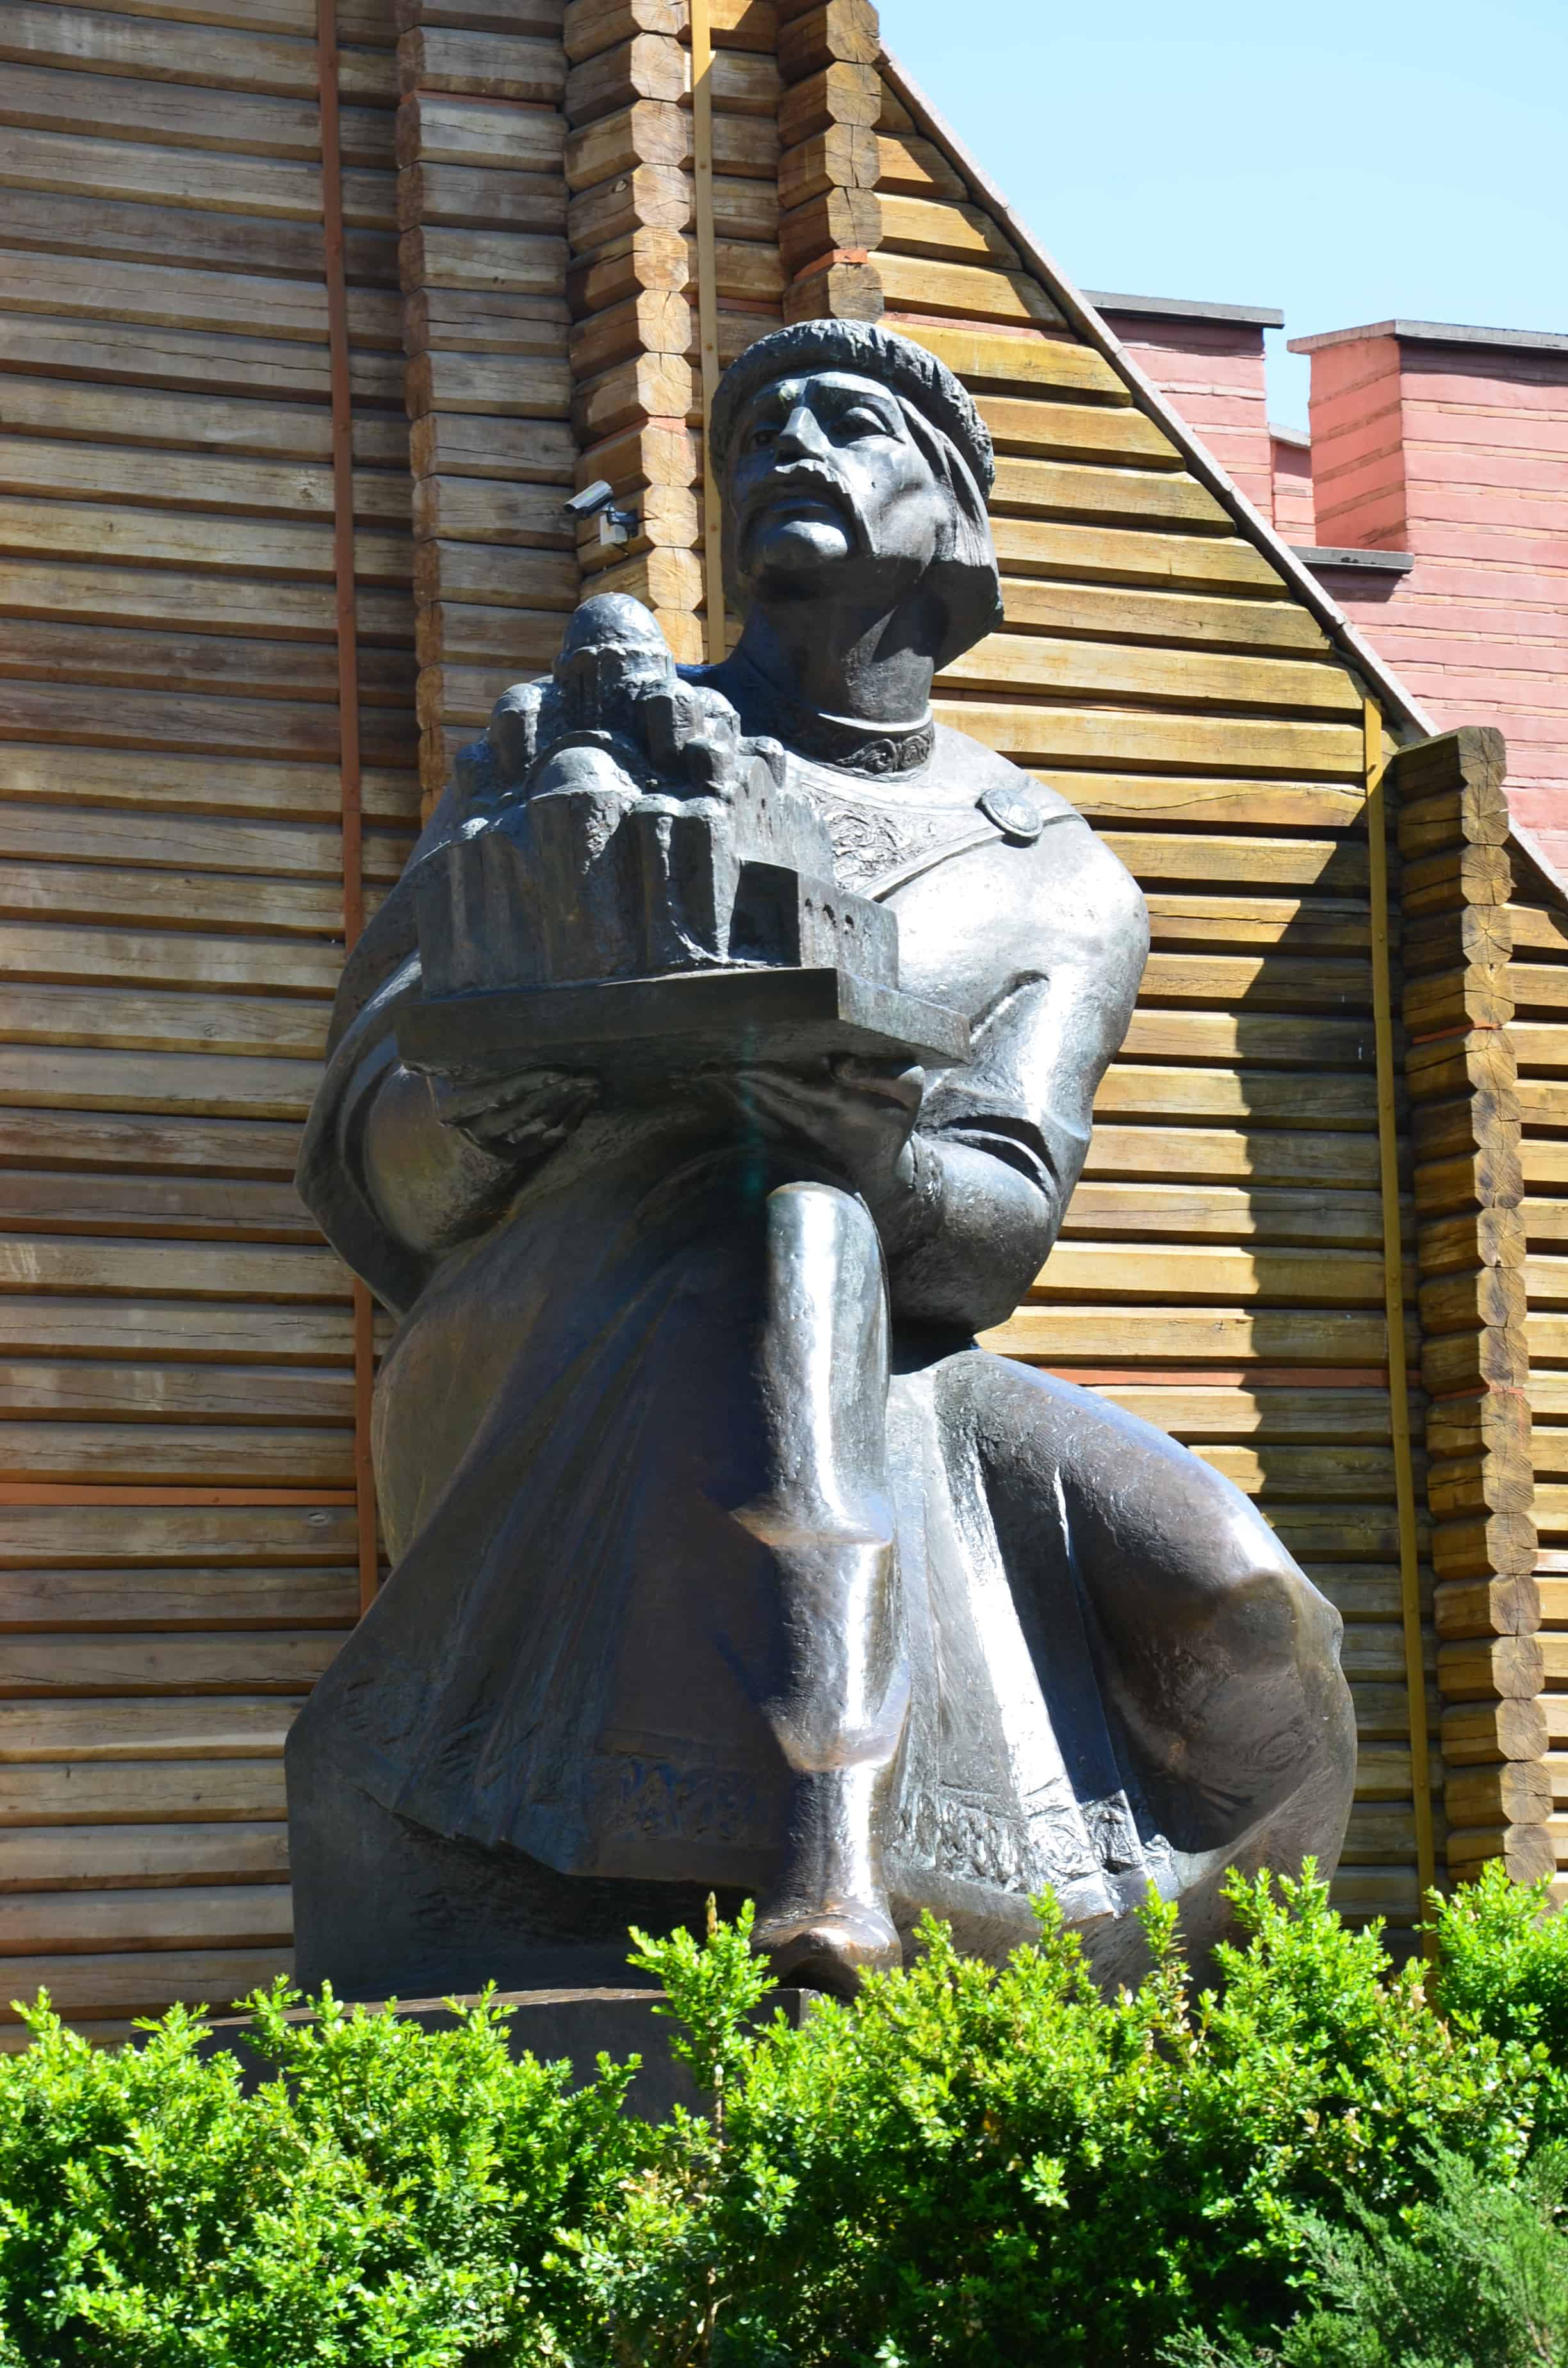 Yaroslav the Wise statue in Kyiv, Ukraine